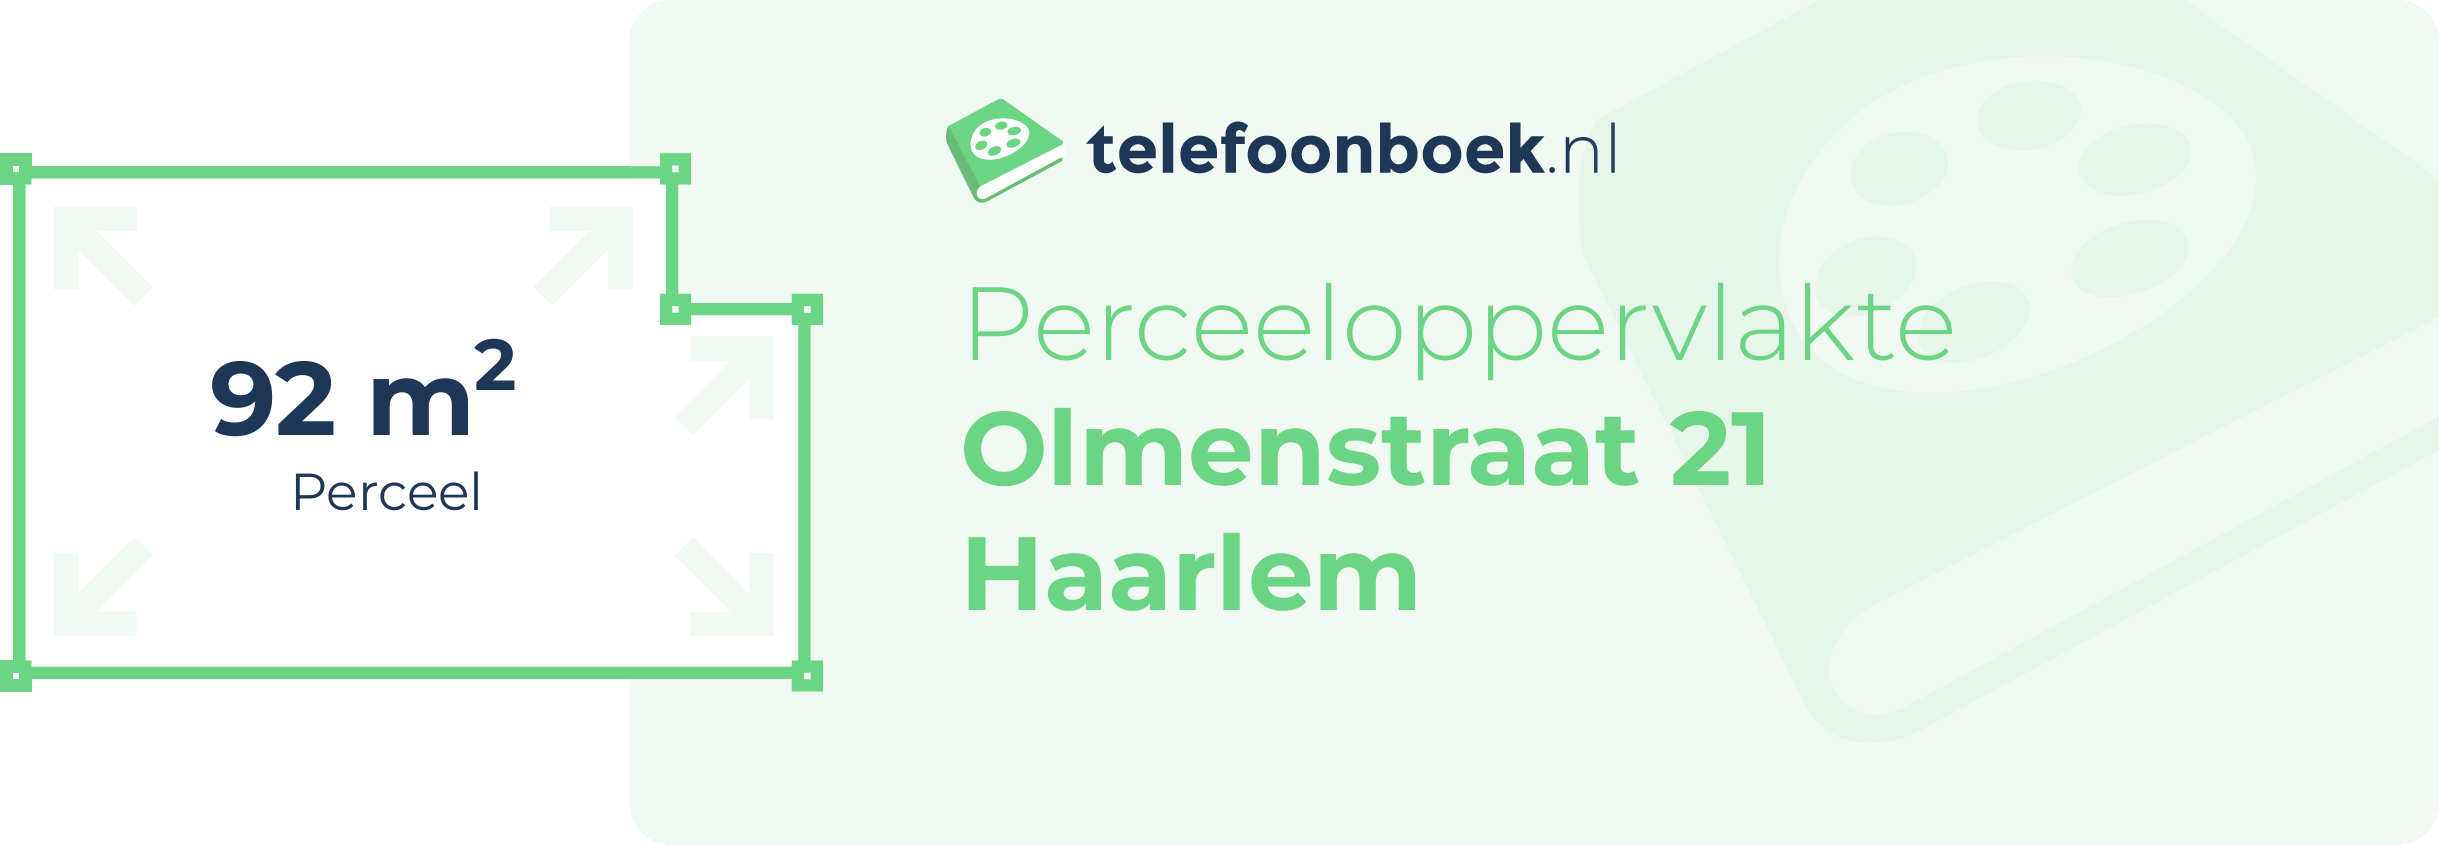 Perceeloppervlakte Olmenstraat 21 Haarlem